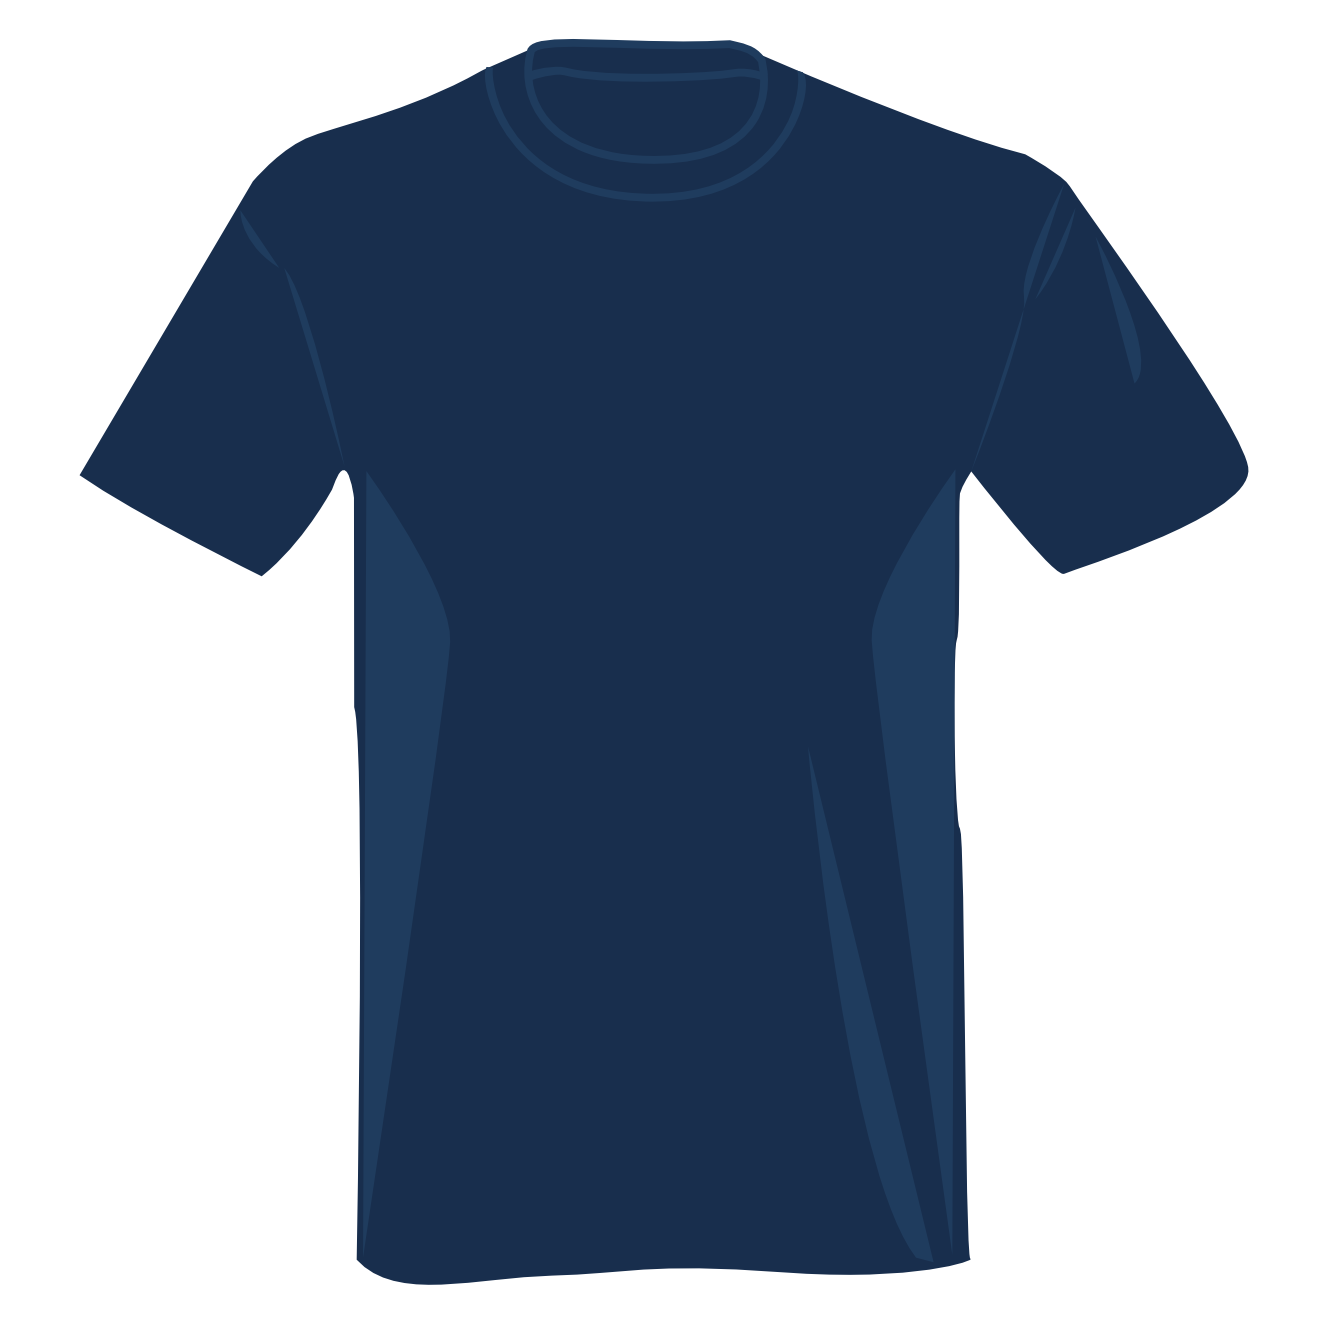 T shirt clip art blue shirt clipart cliparts for you